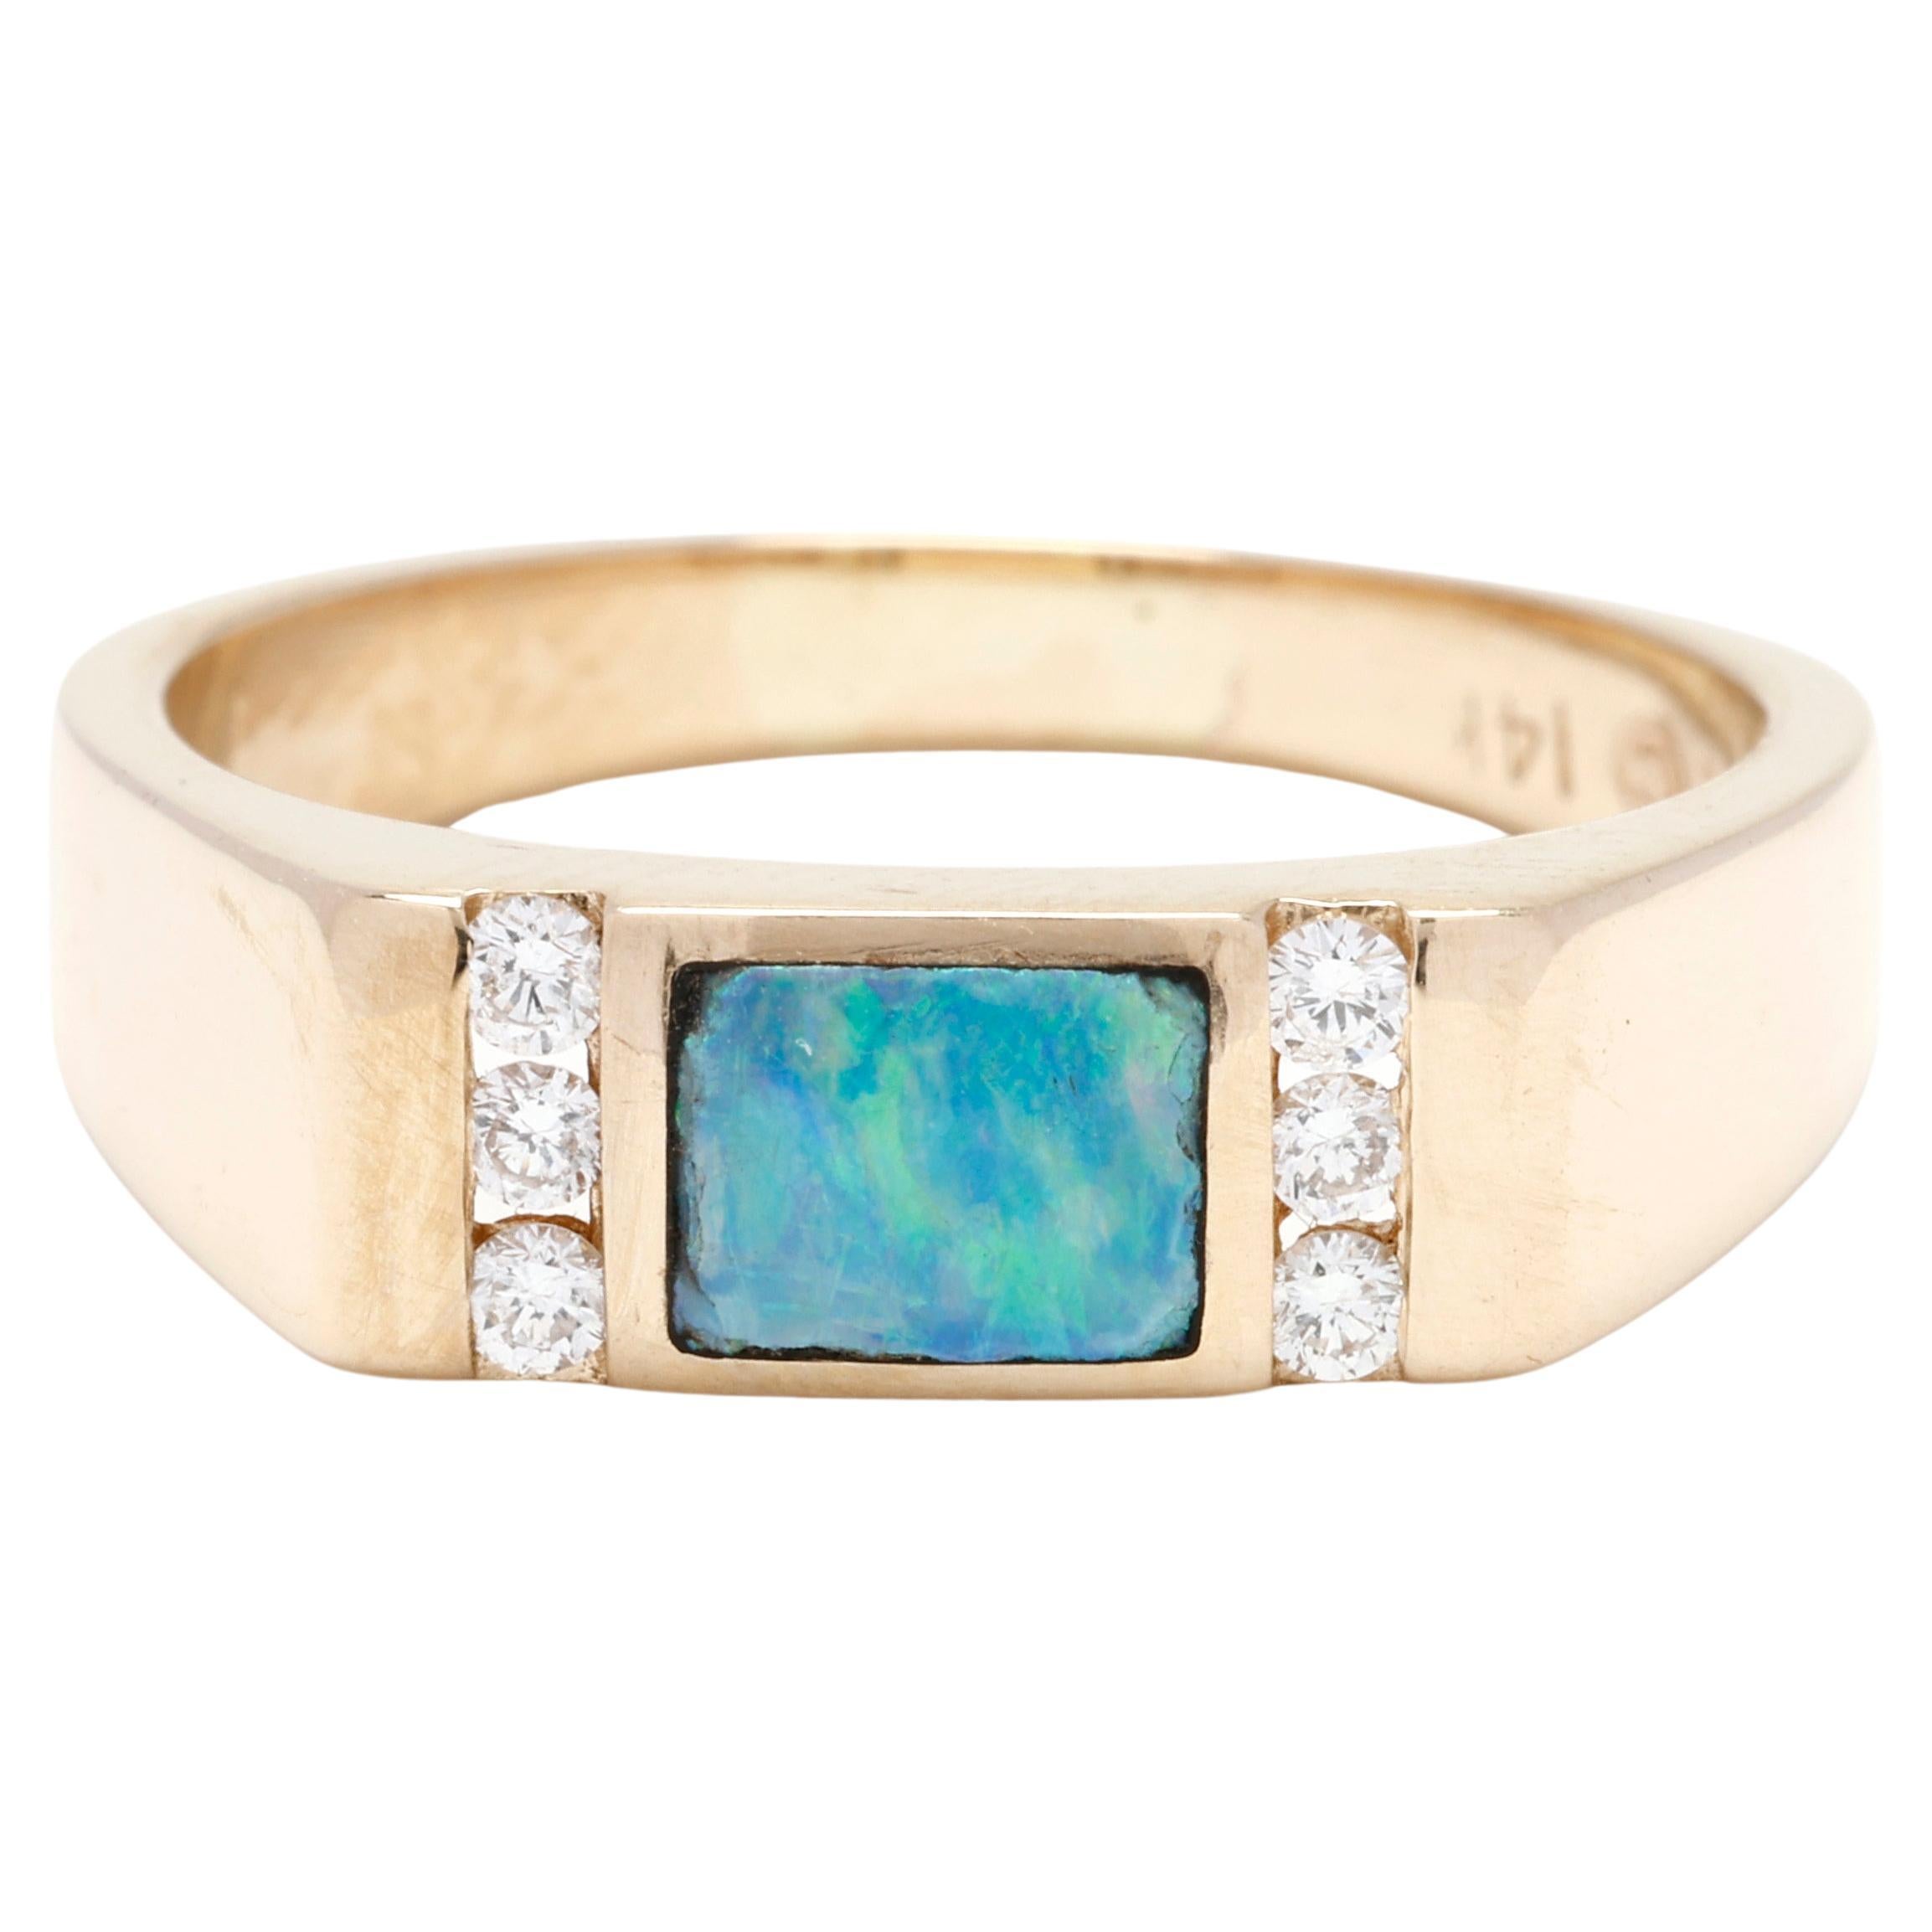 Rainbow Opal and Diamond Rectangular Band Ring, 14k Yellow Gold, Ring Size 6.75